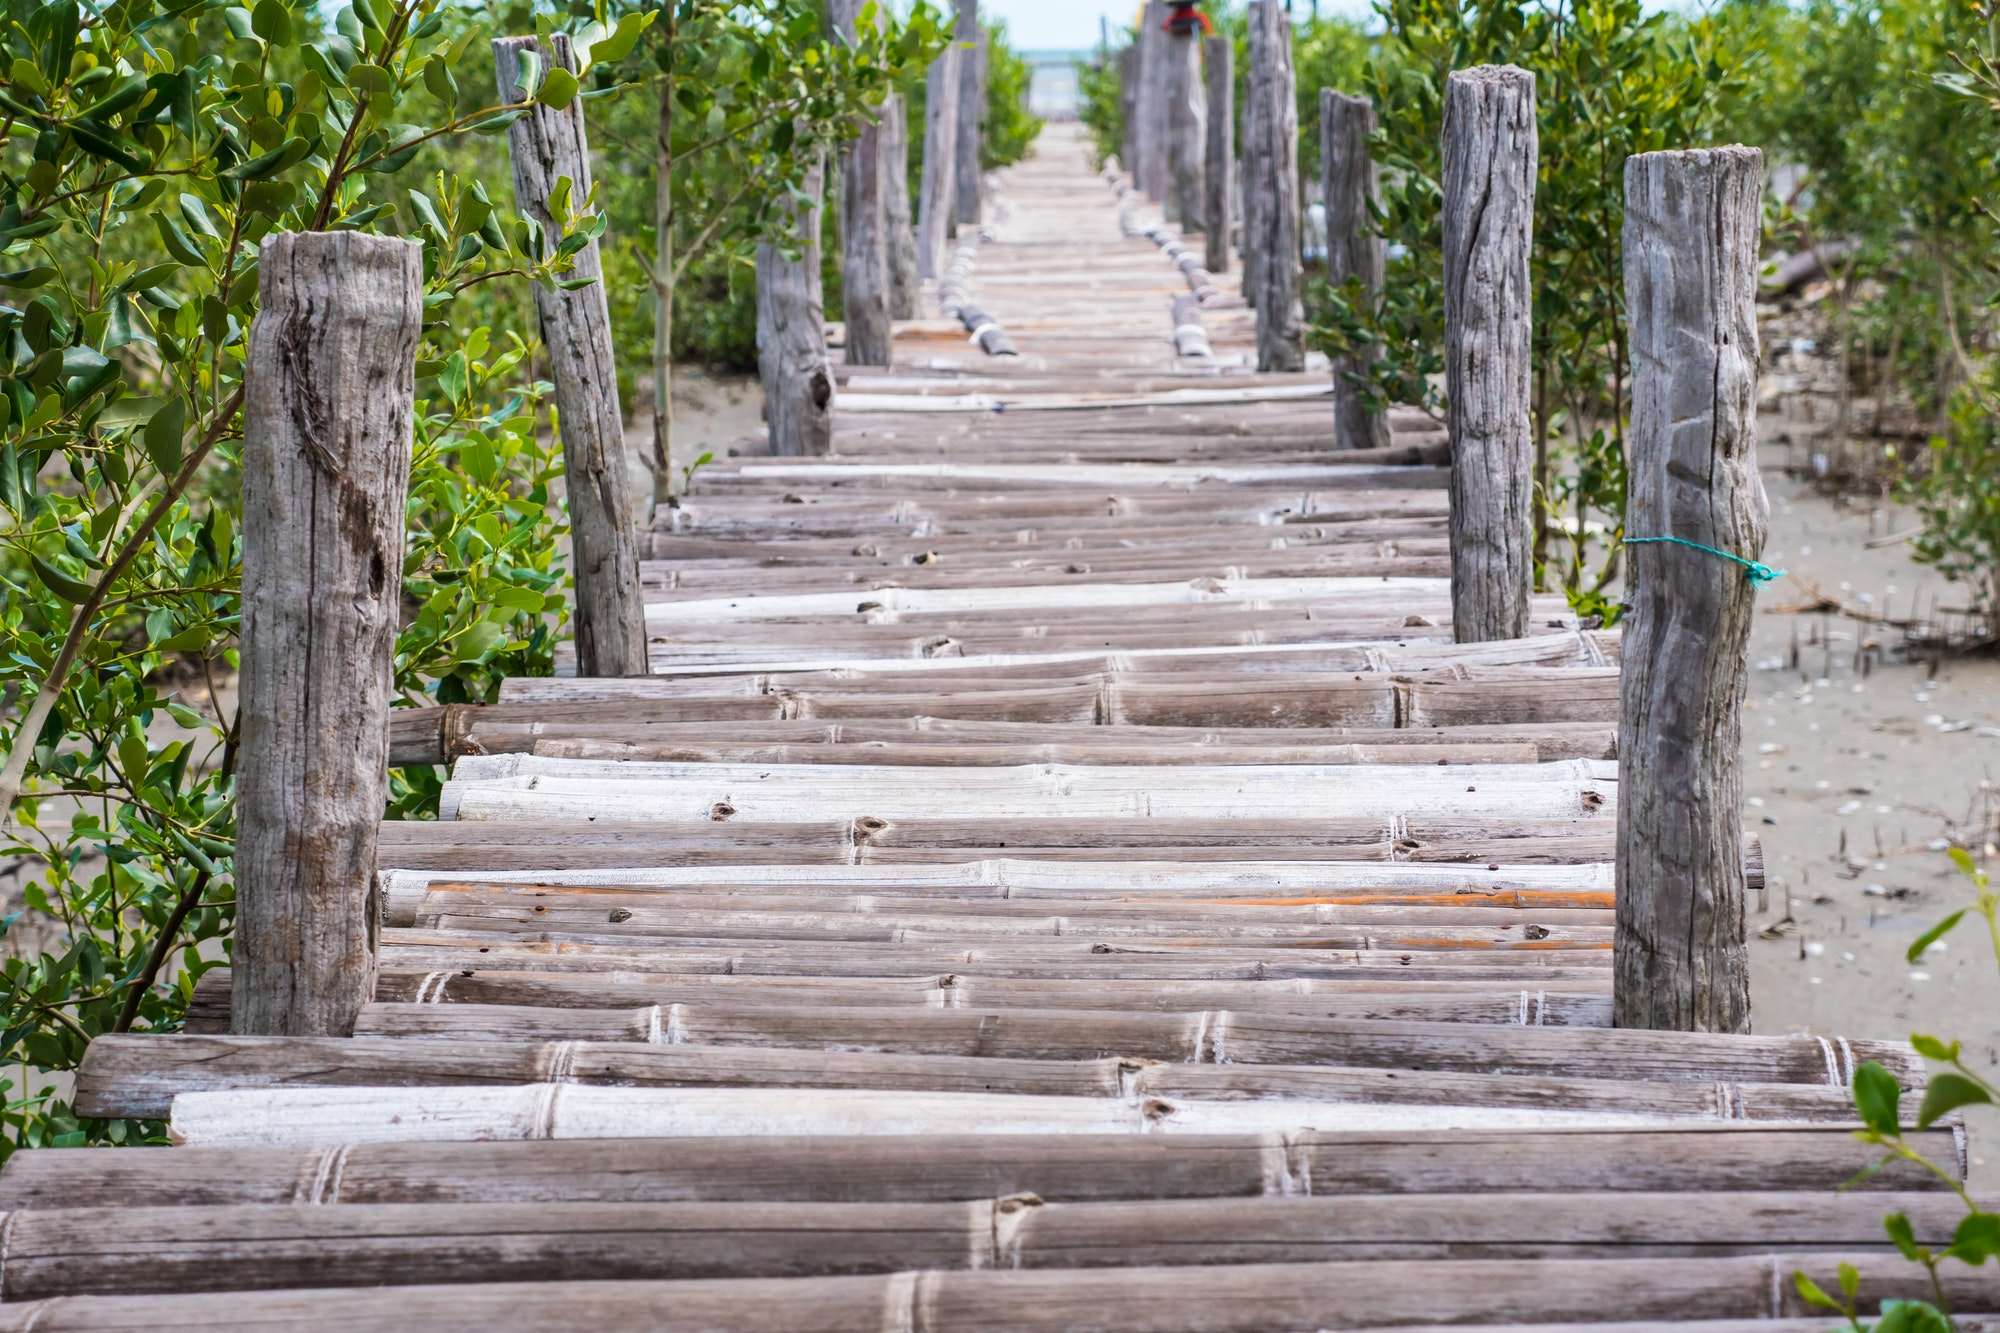 Wooden bridge over mangrove forest.